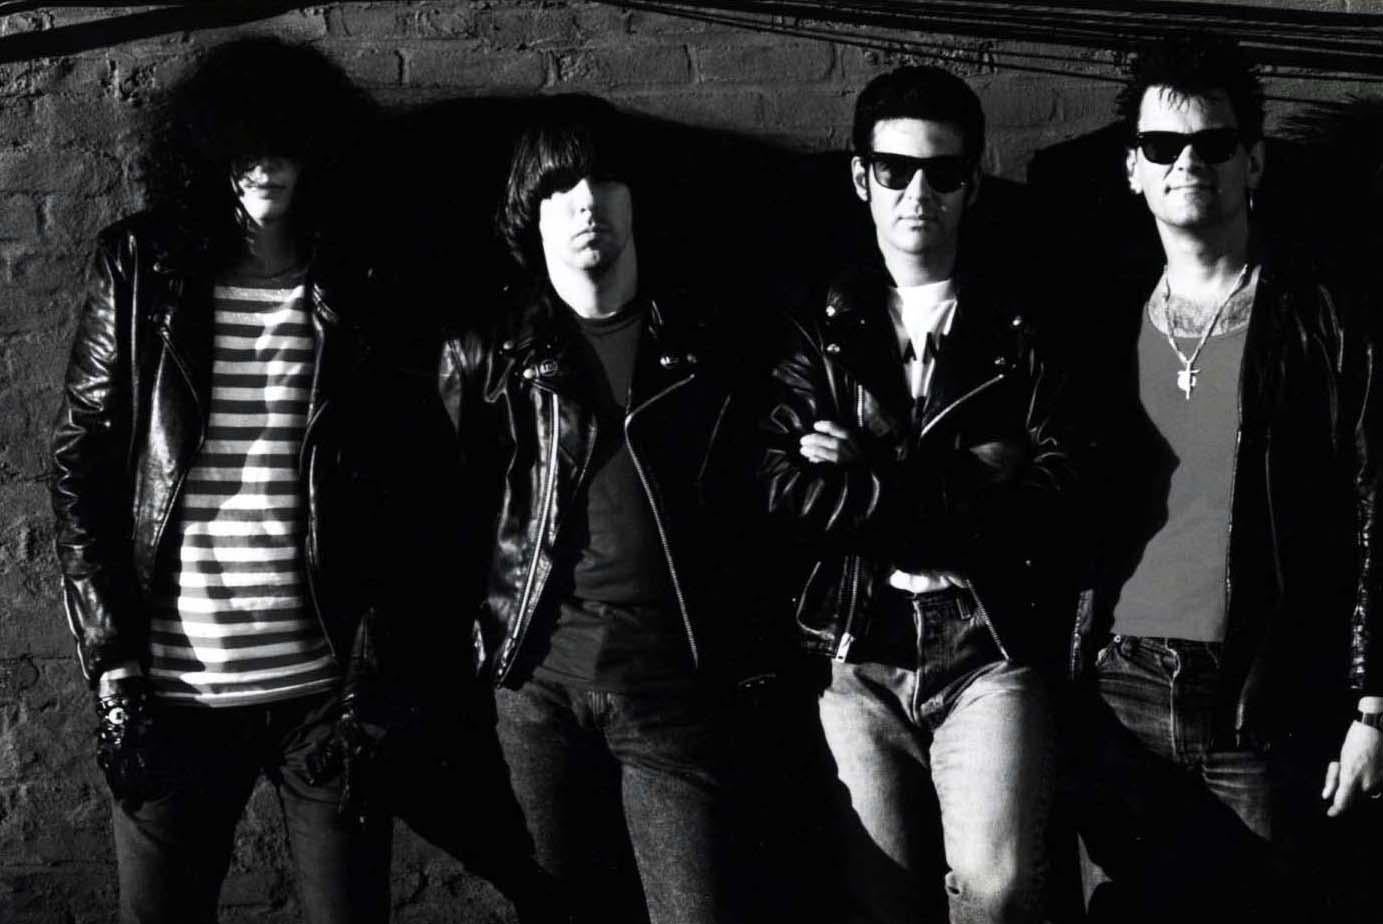 Vintage The Ramones photograph (Ramones darkroom photograph)  - Photograph by Roberta Bayley